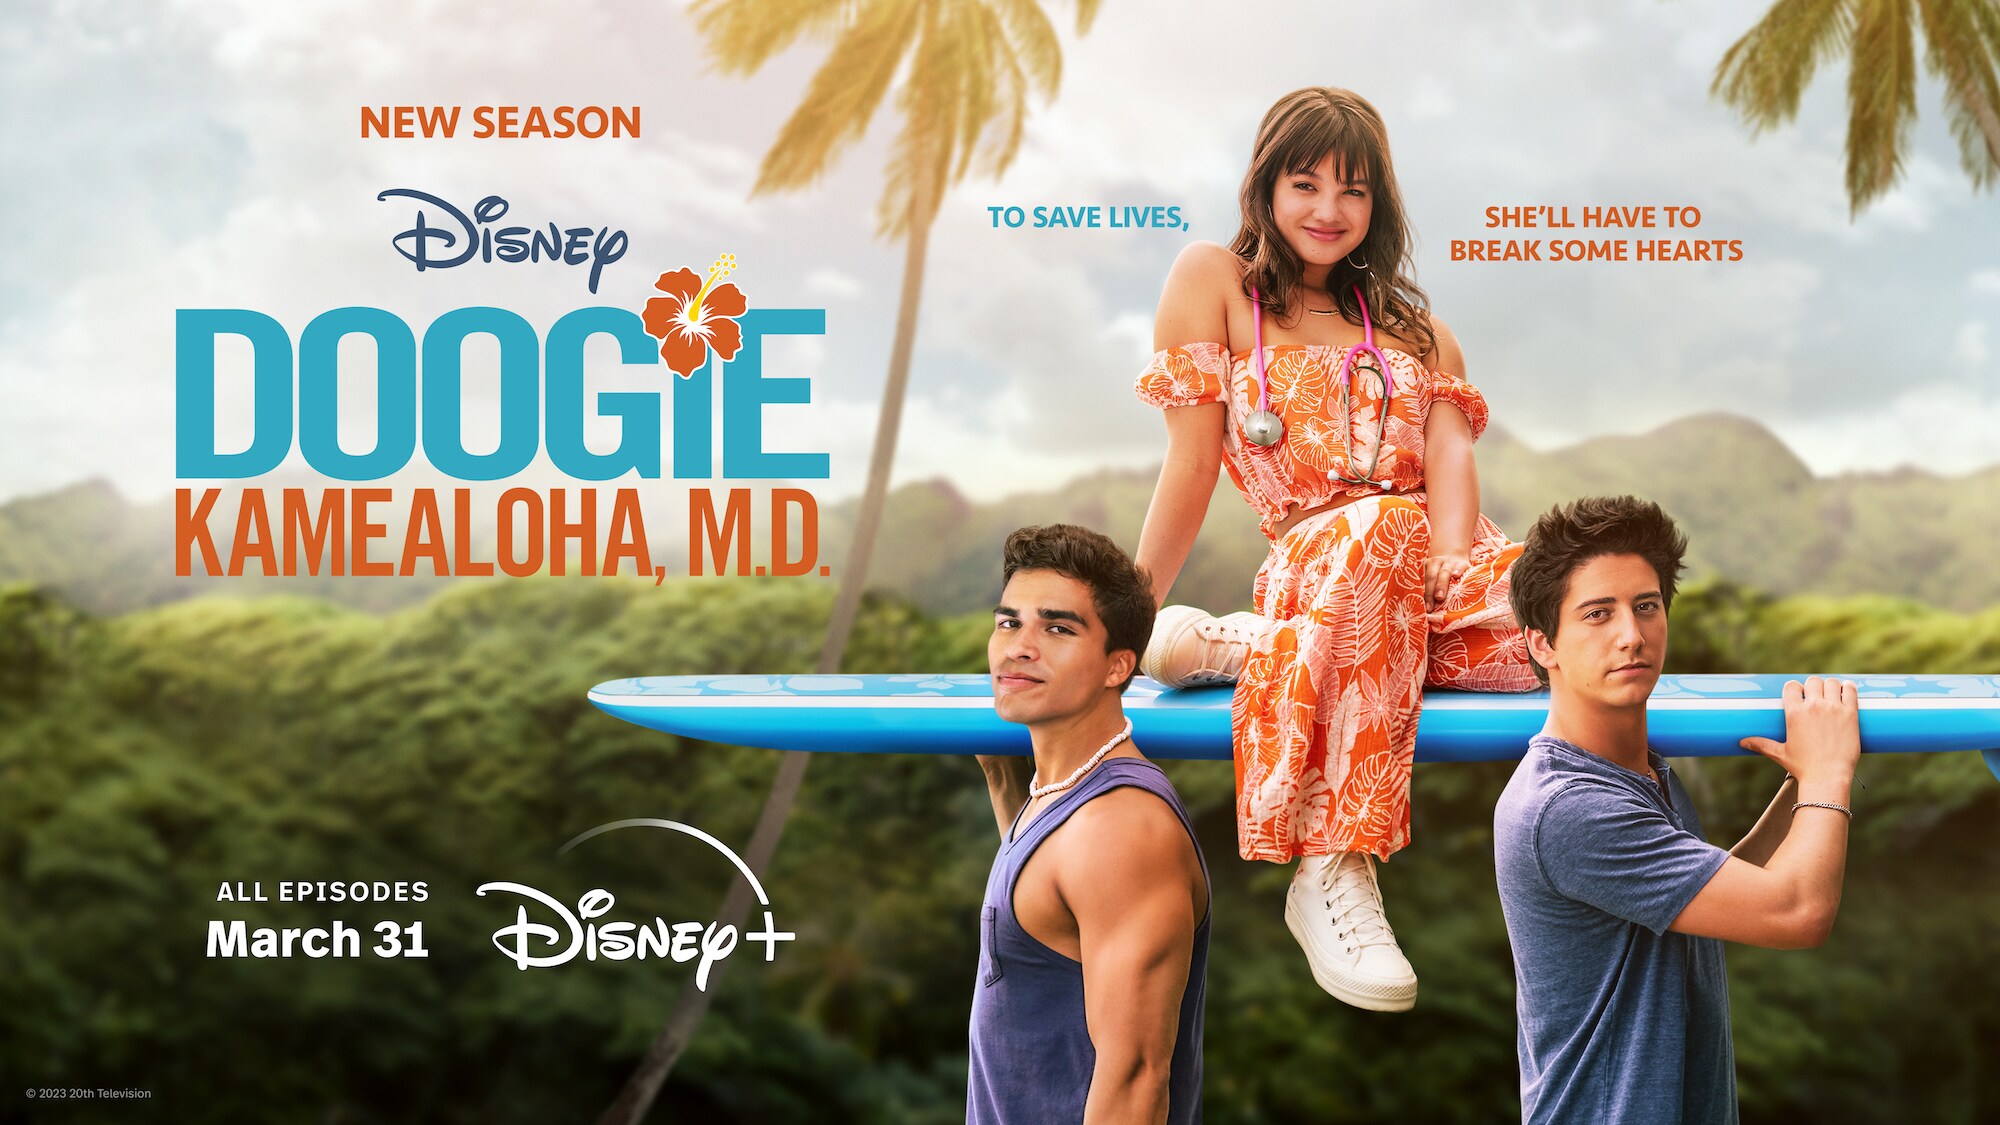 The Doctor Is In!   “Doogie Kamealoha, M.D.” Season Two Debuts March 31 On Disney+